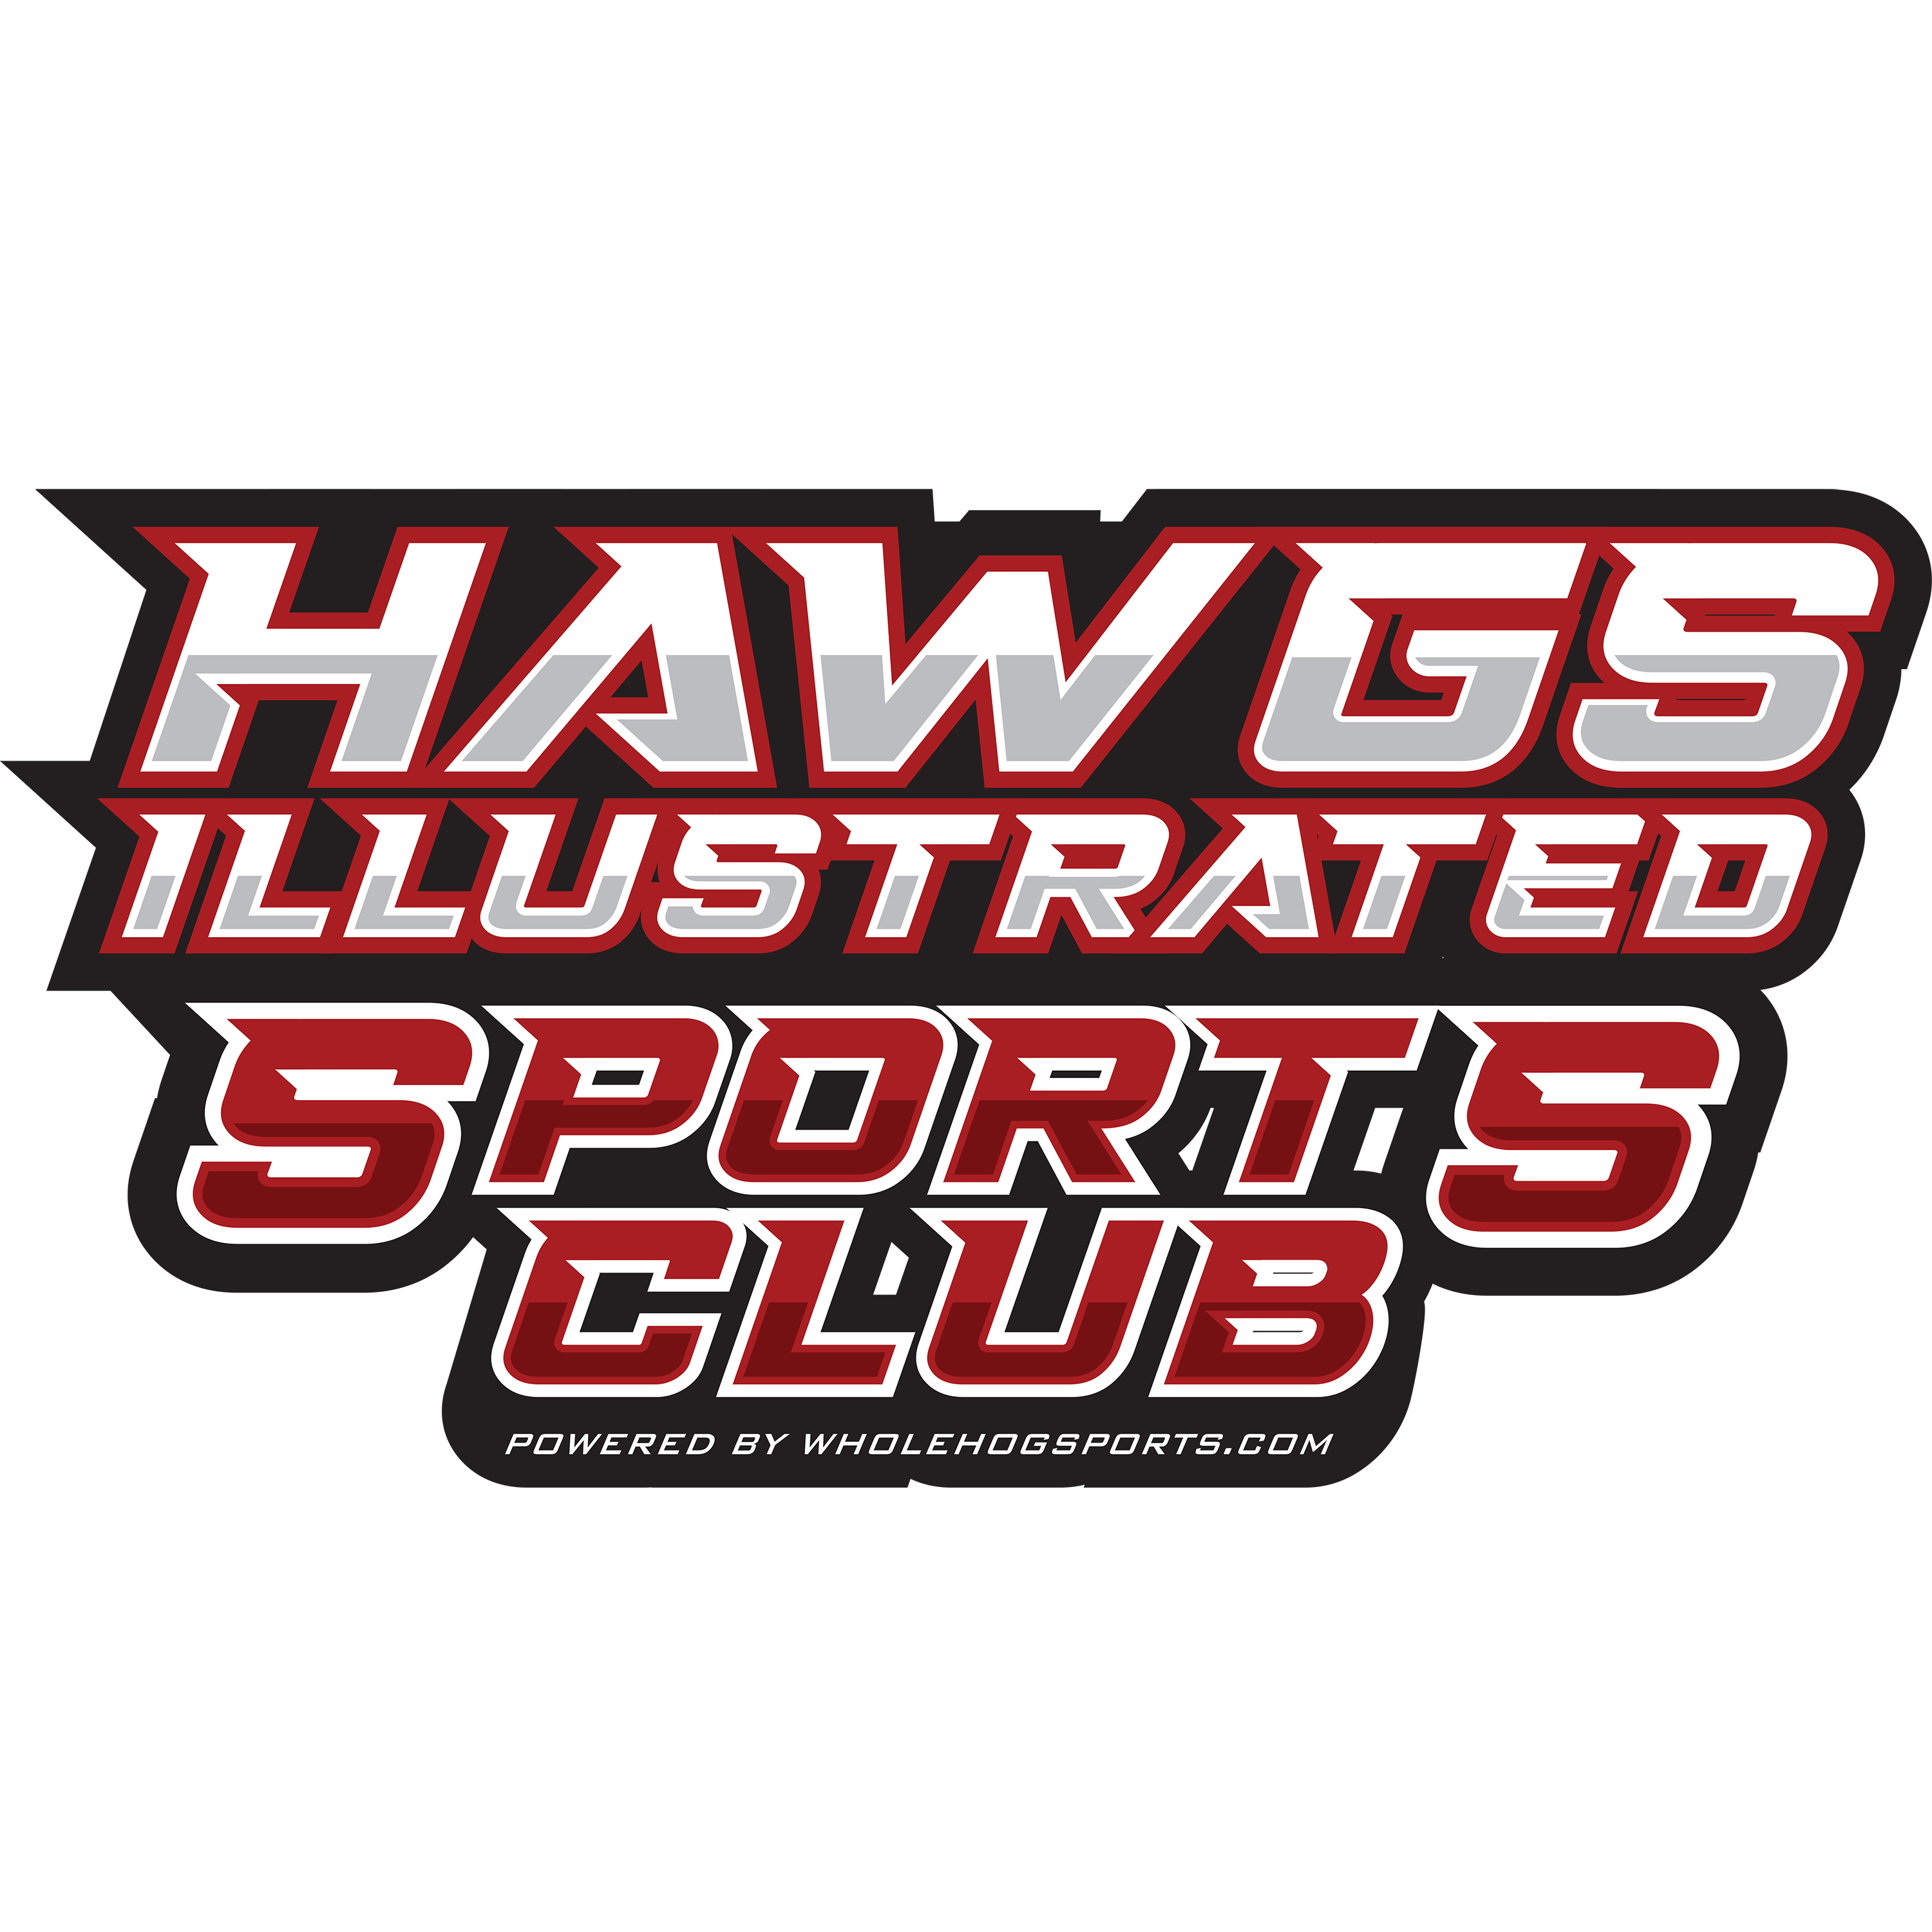 Hawgs Illustrated Sports Club Podcast: Guest speaker Gary Adams